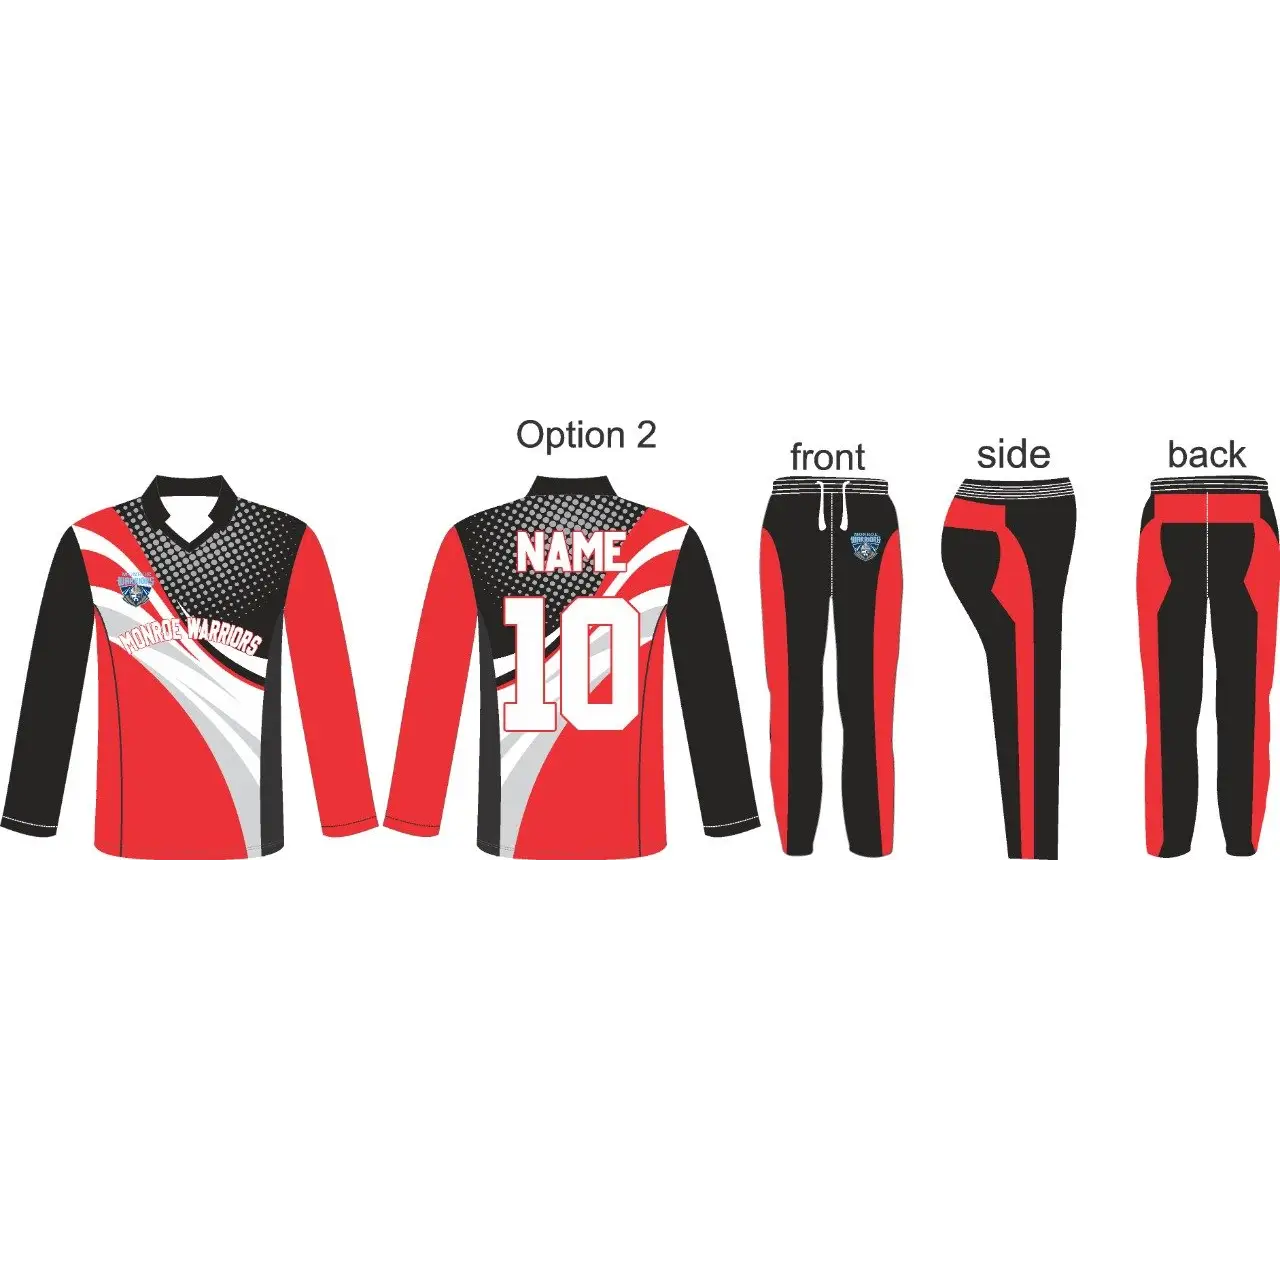 Cricket Uniform Kit Red Black Design - S-XL - Custom Cricket Wear 2PC Full